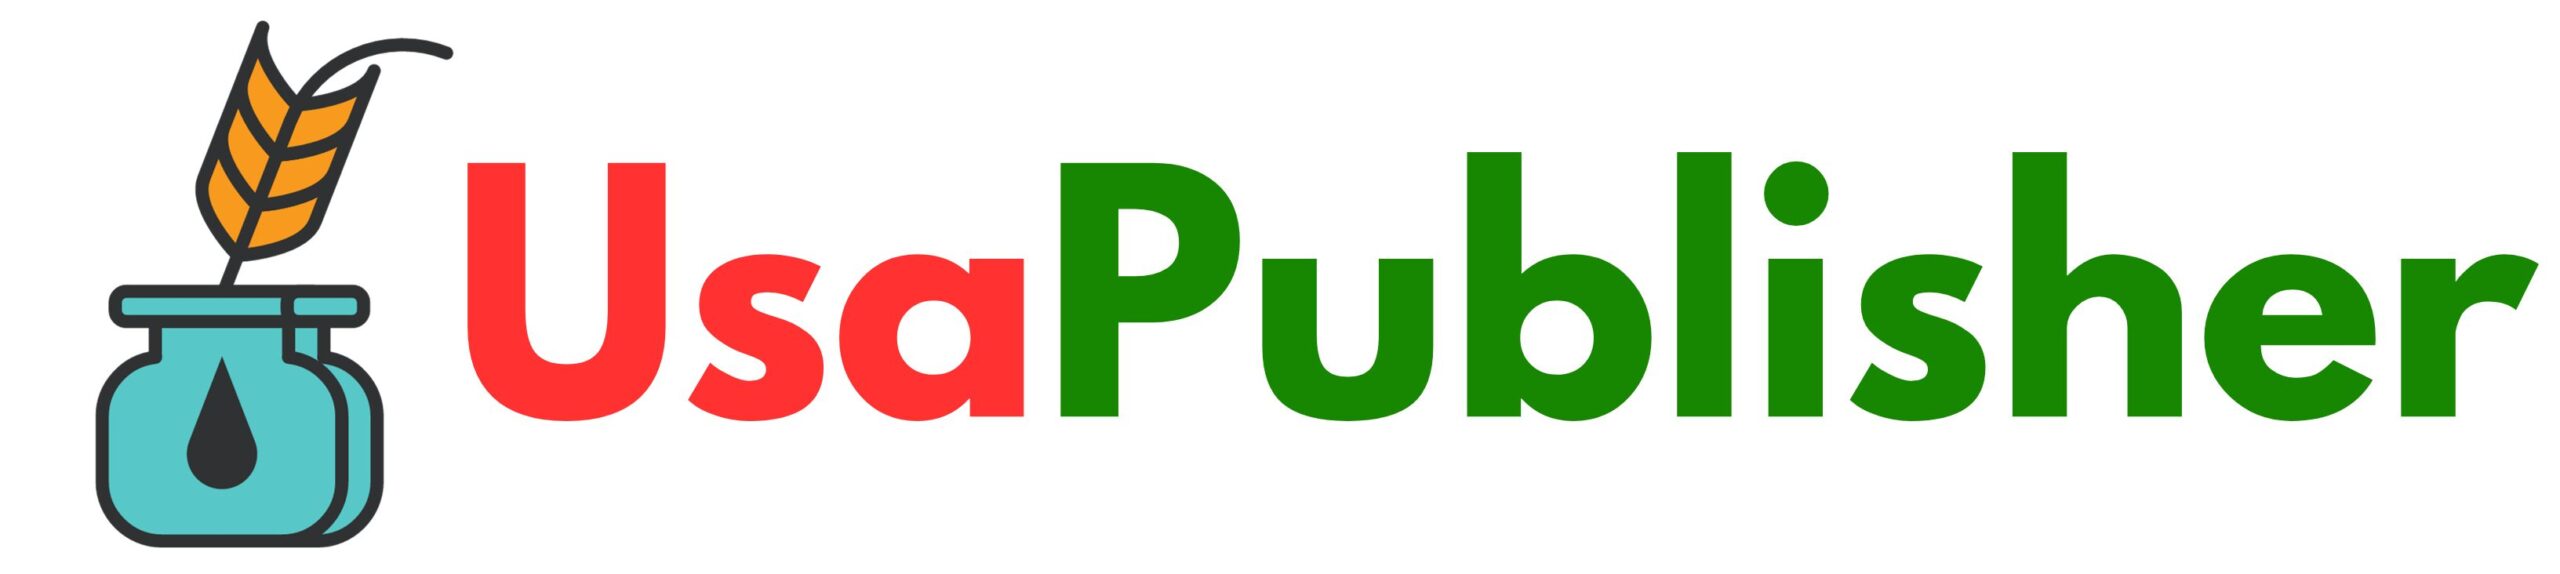 UsaPublisher logo hd